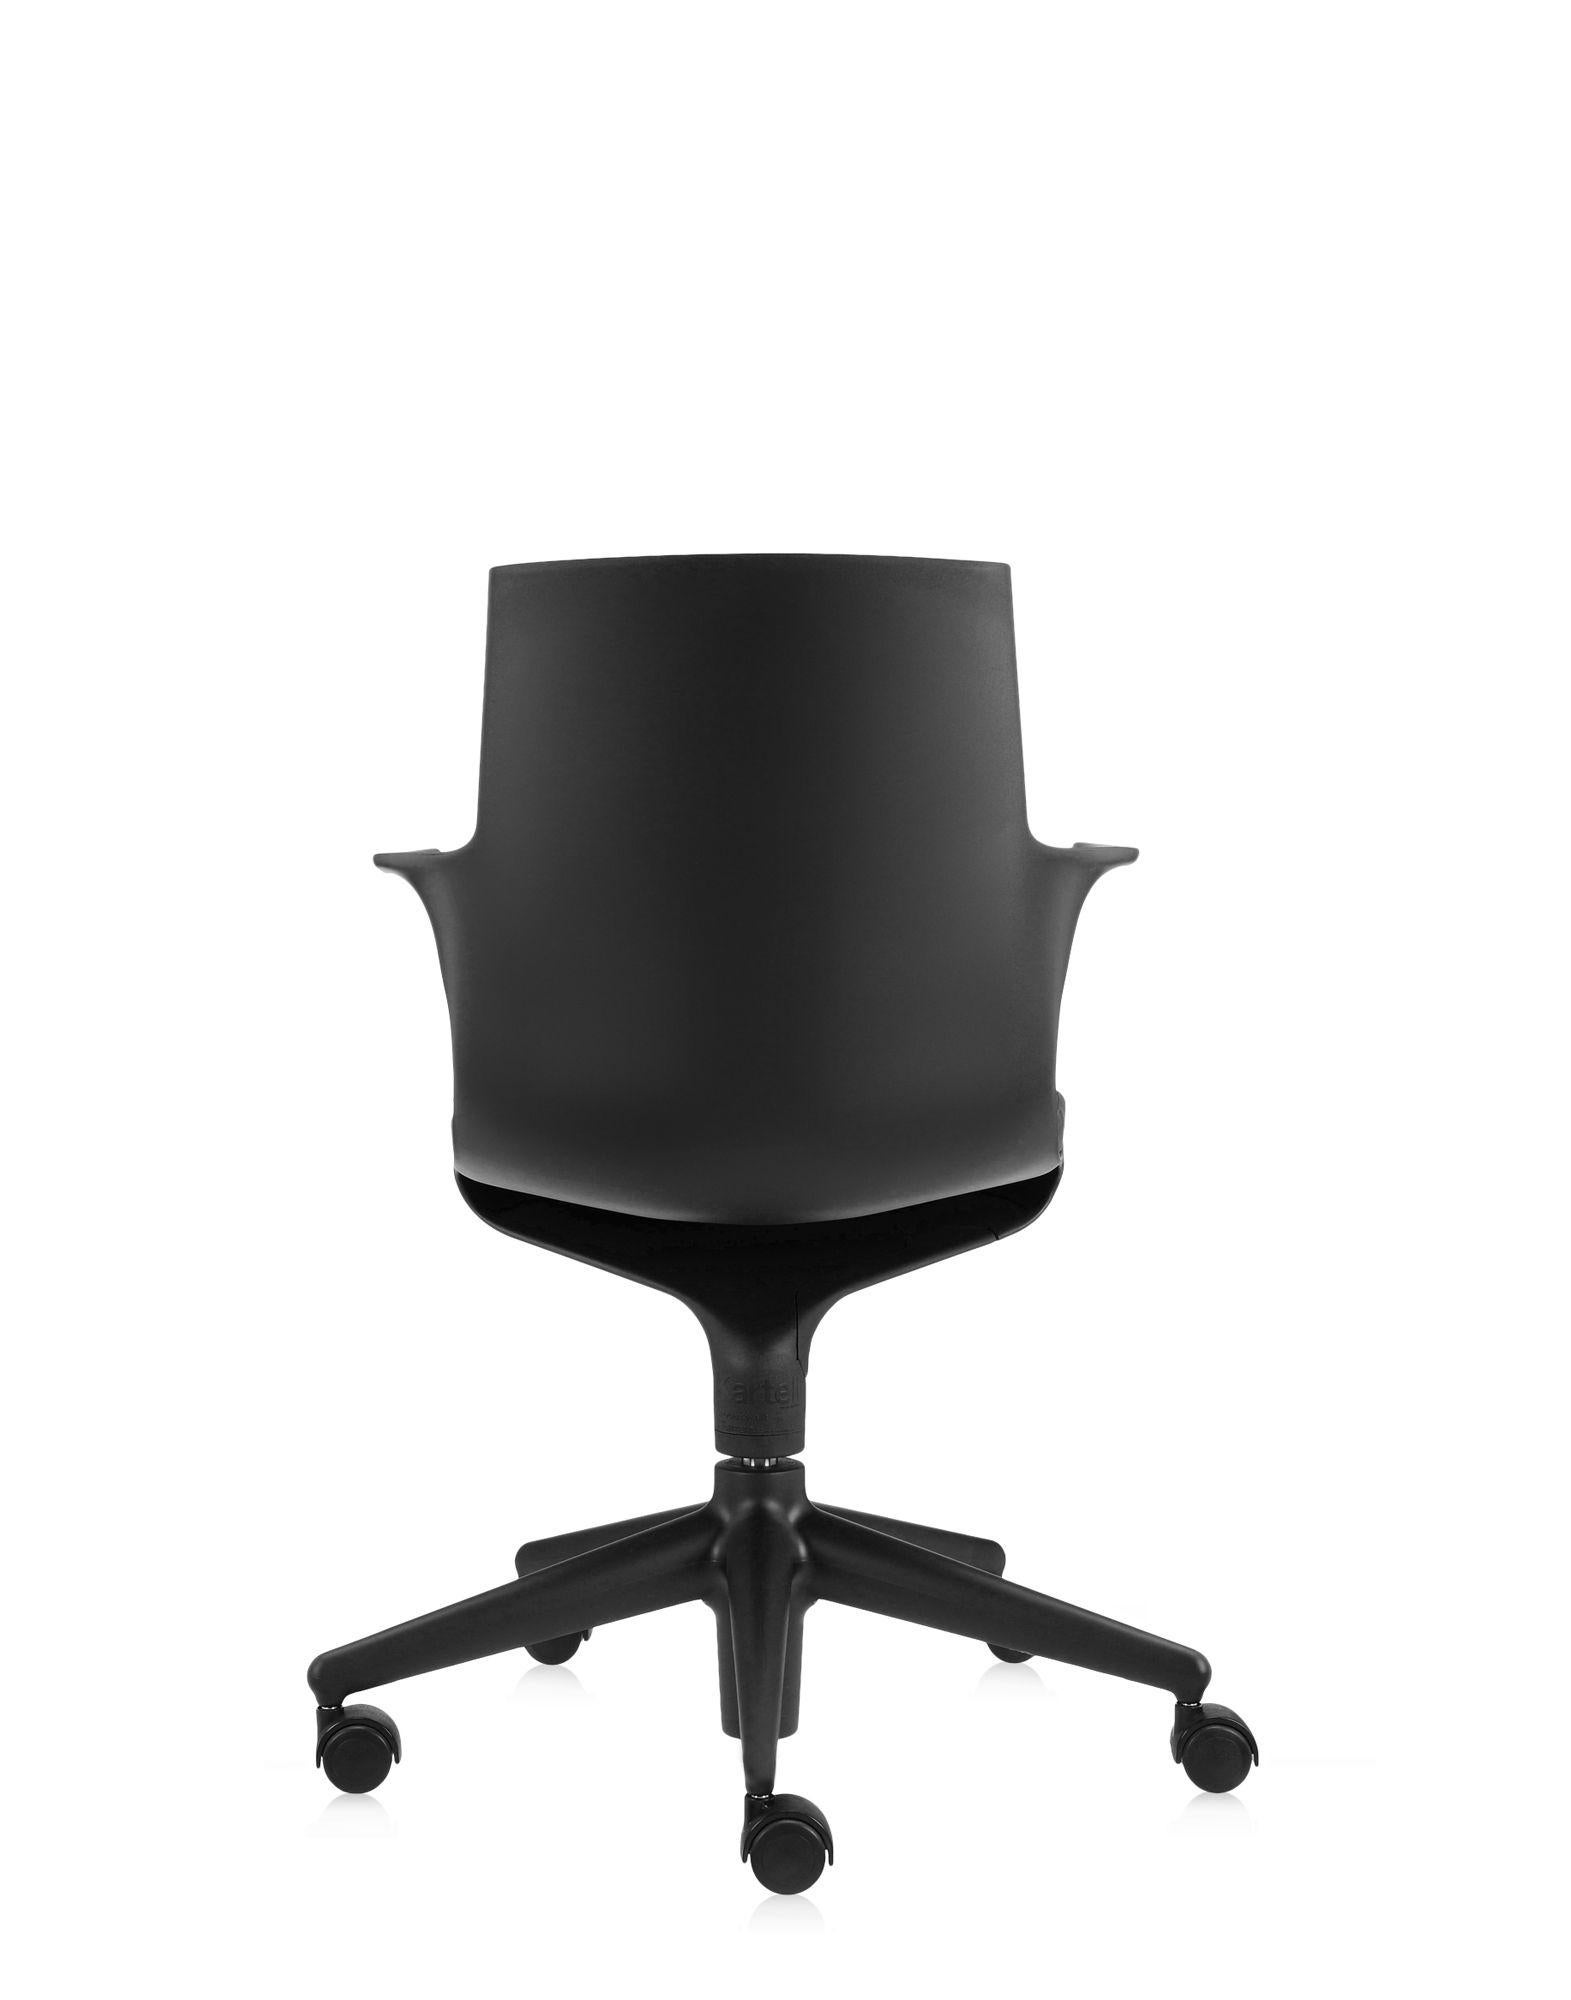 Italian Kartell Spoon Chair in Black by Antonio Citterio & Toan Nguyen For Sale